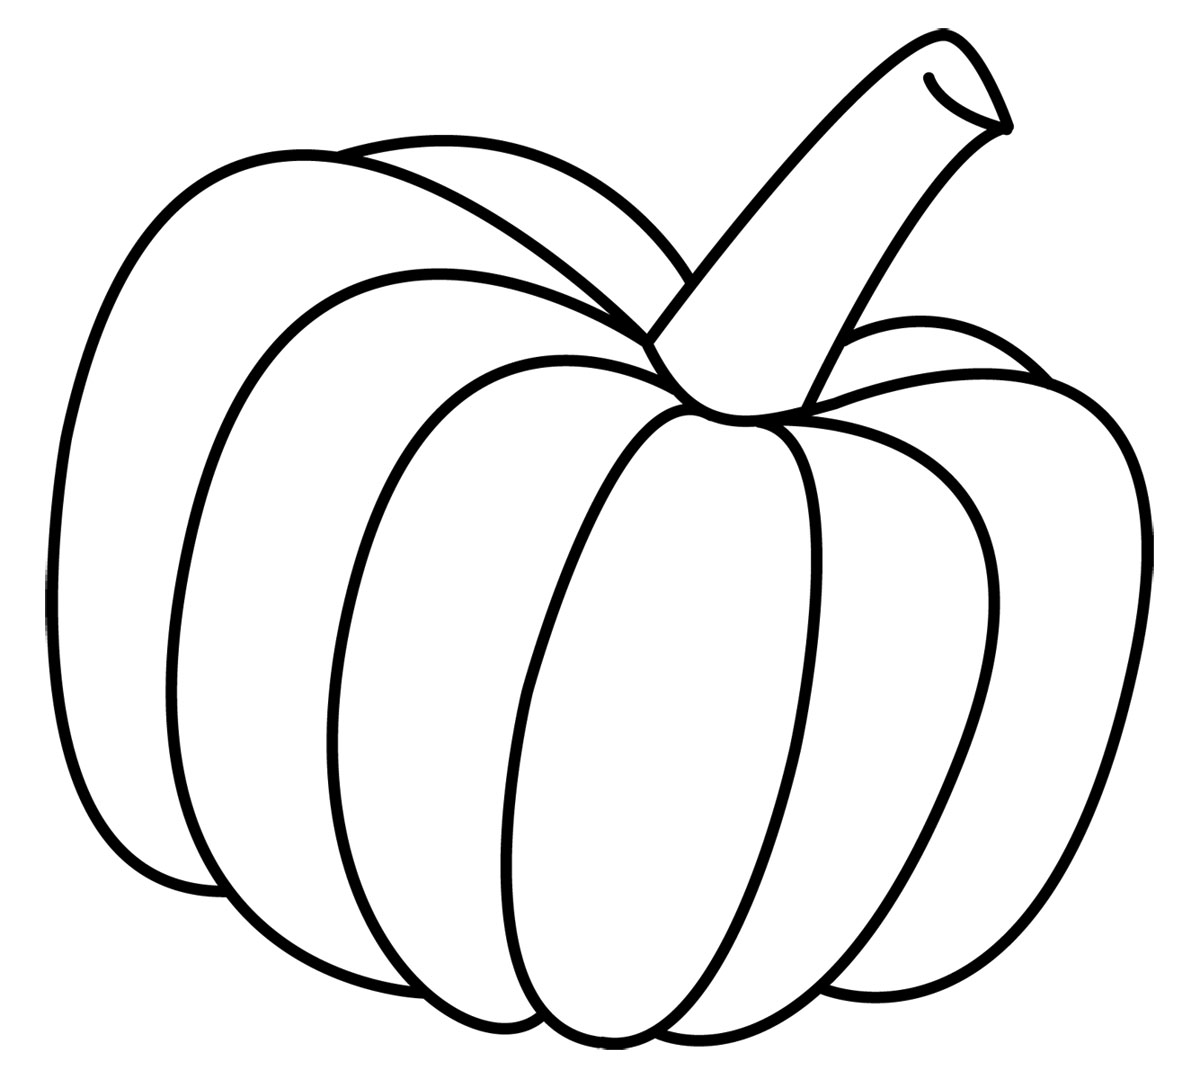 Pumpkin Vine Drawing | Clipart Panda - Free Clipart Images